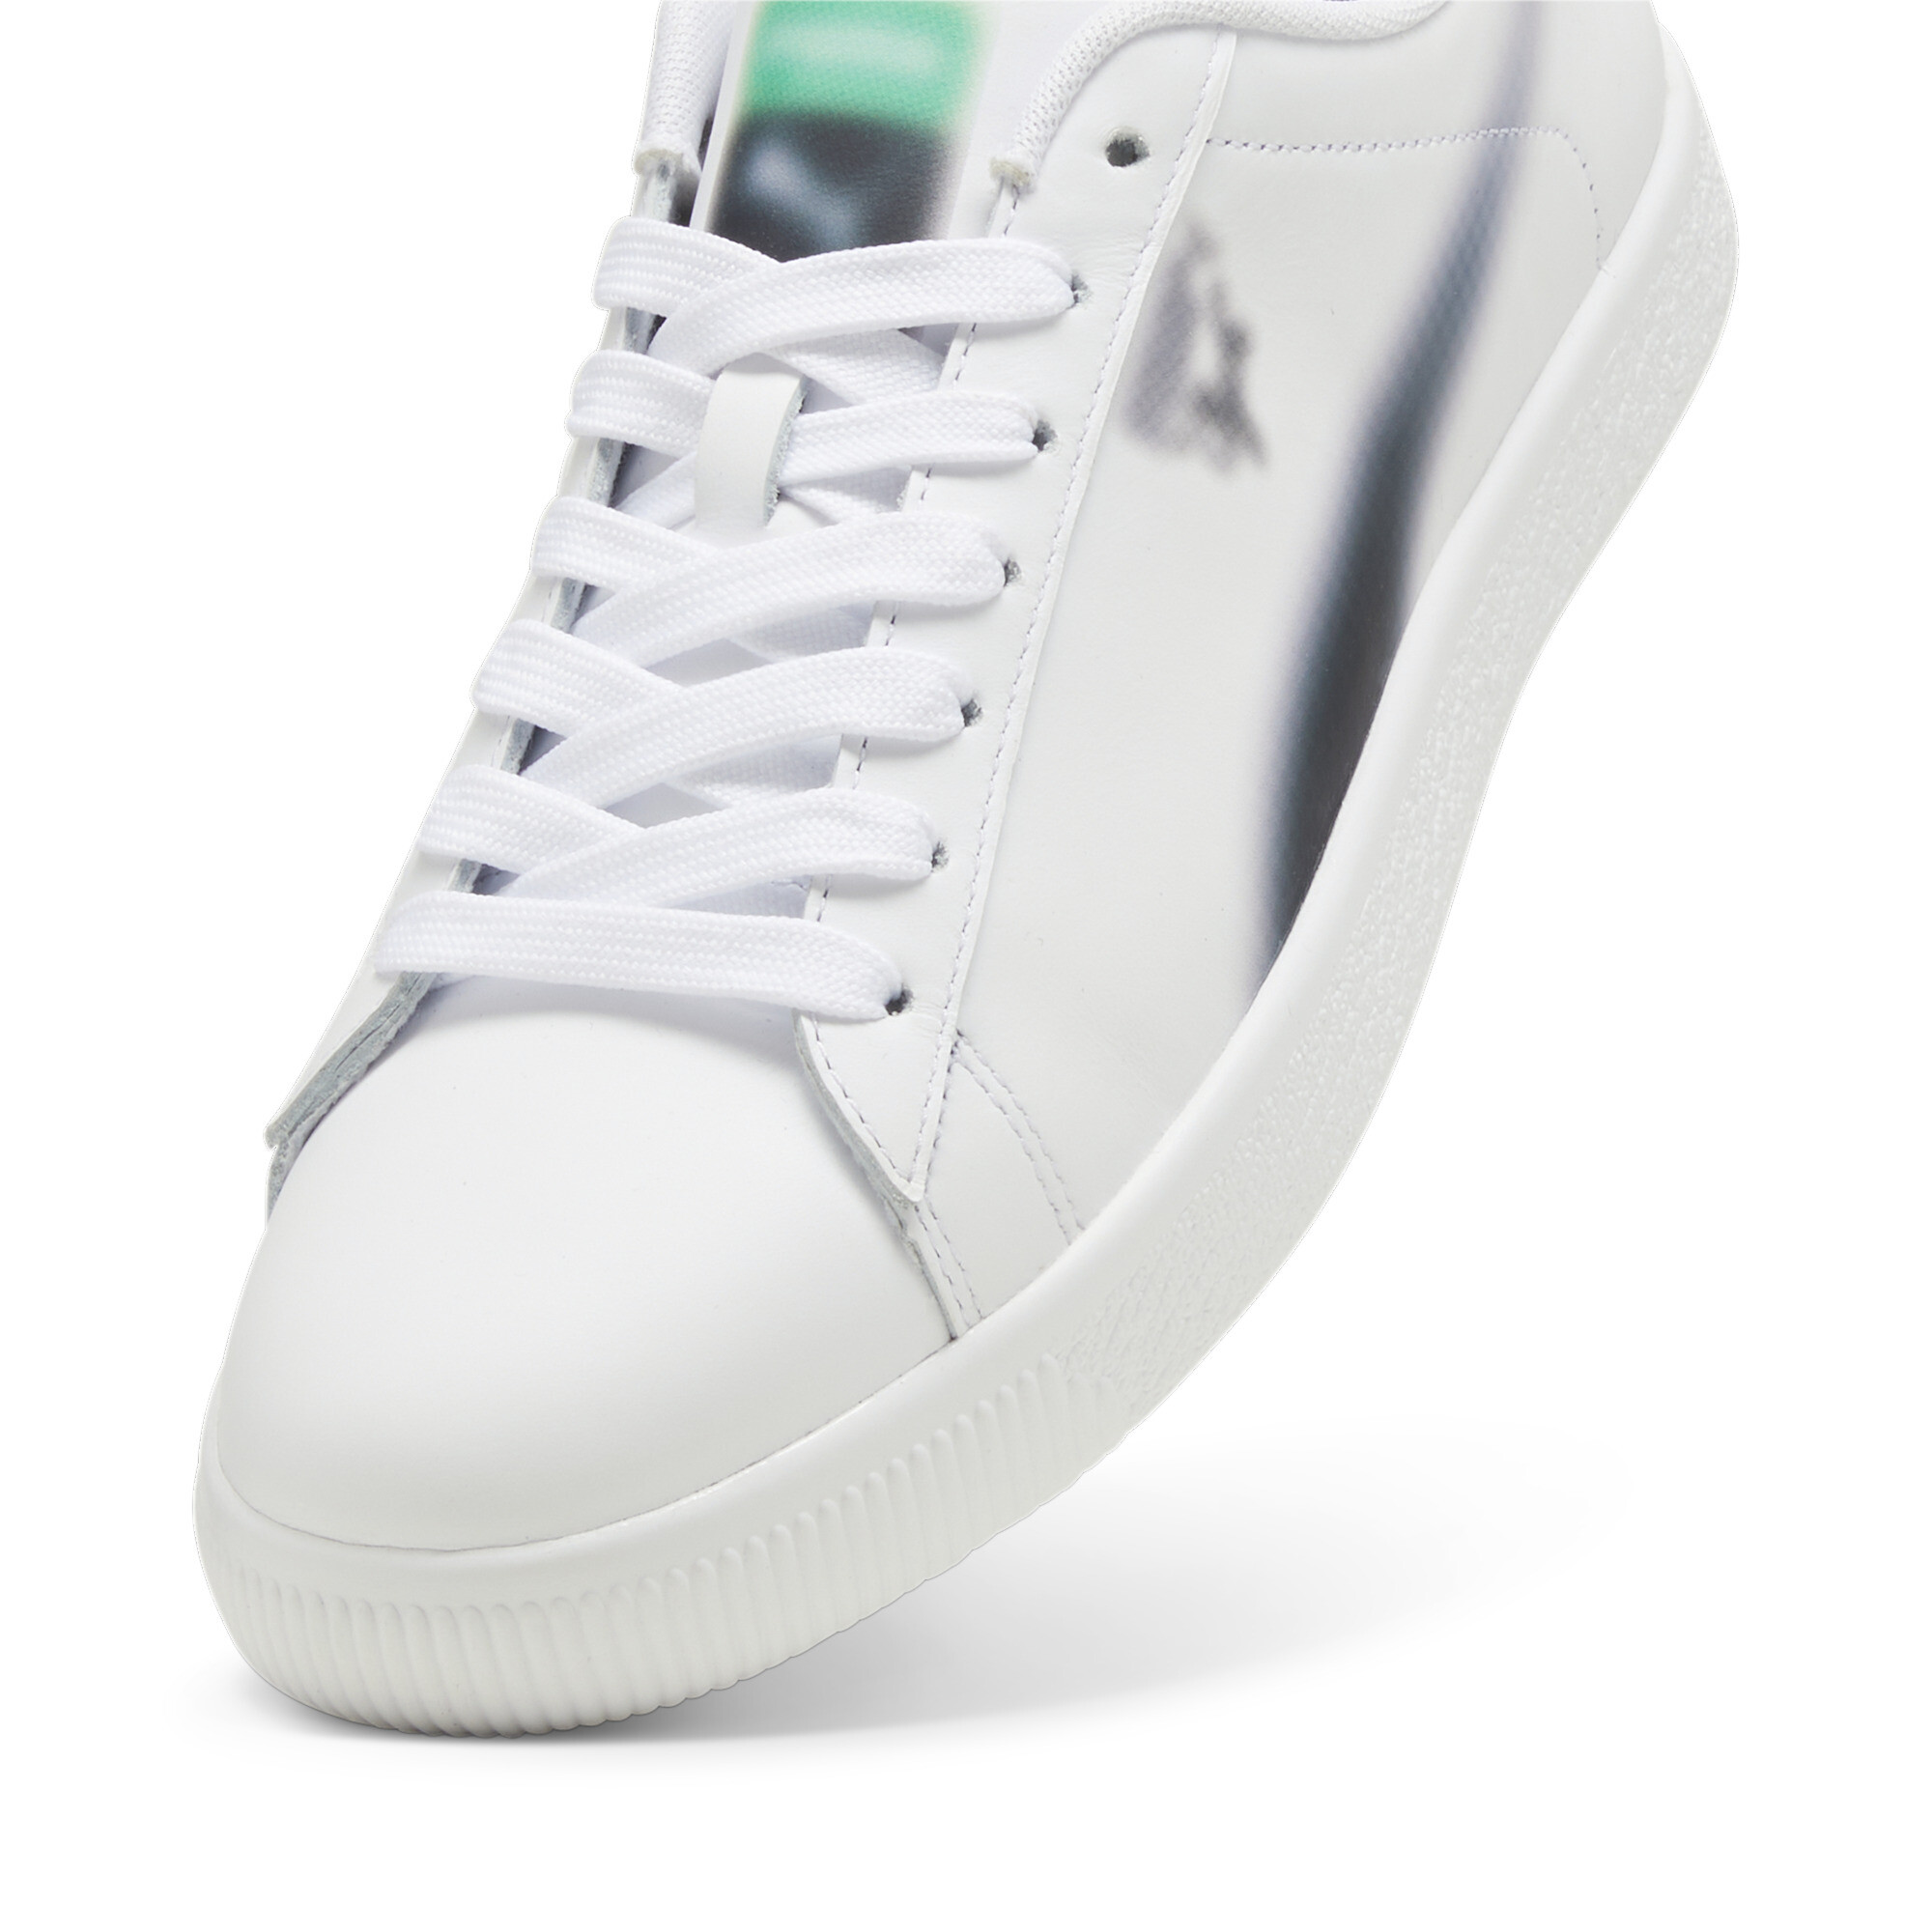 Puma Clyde SKRT SKRT Sneakers, White, Size 44.5, Shoes